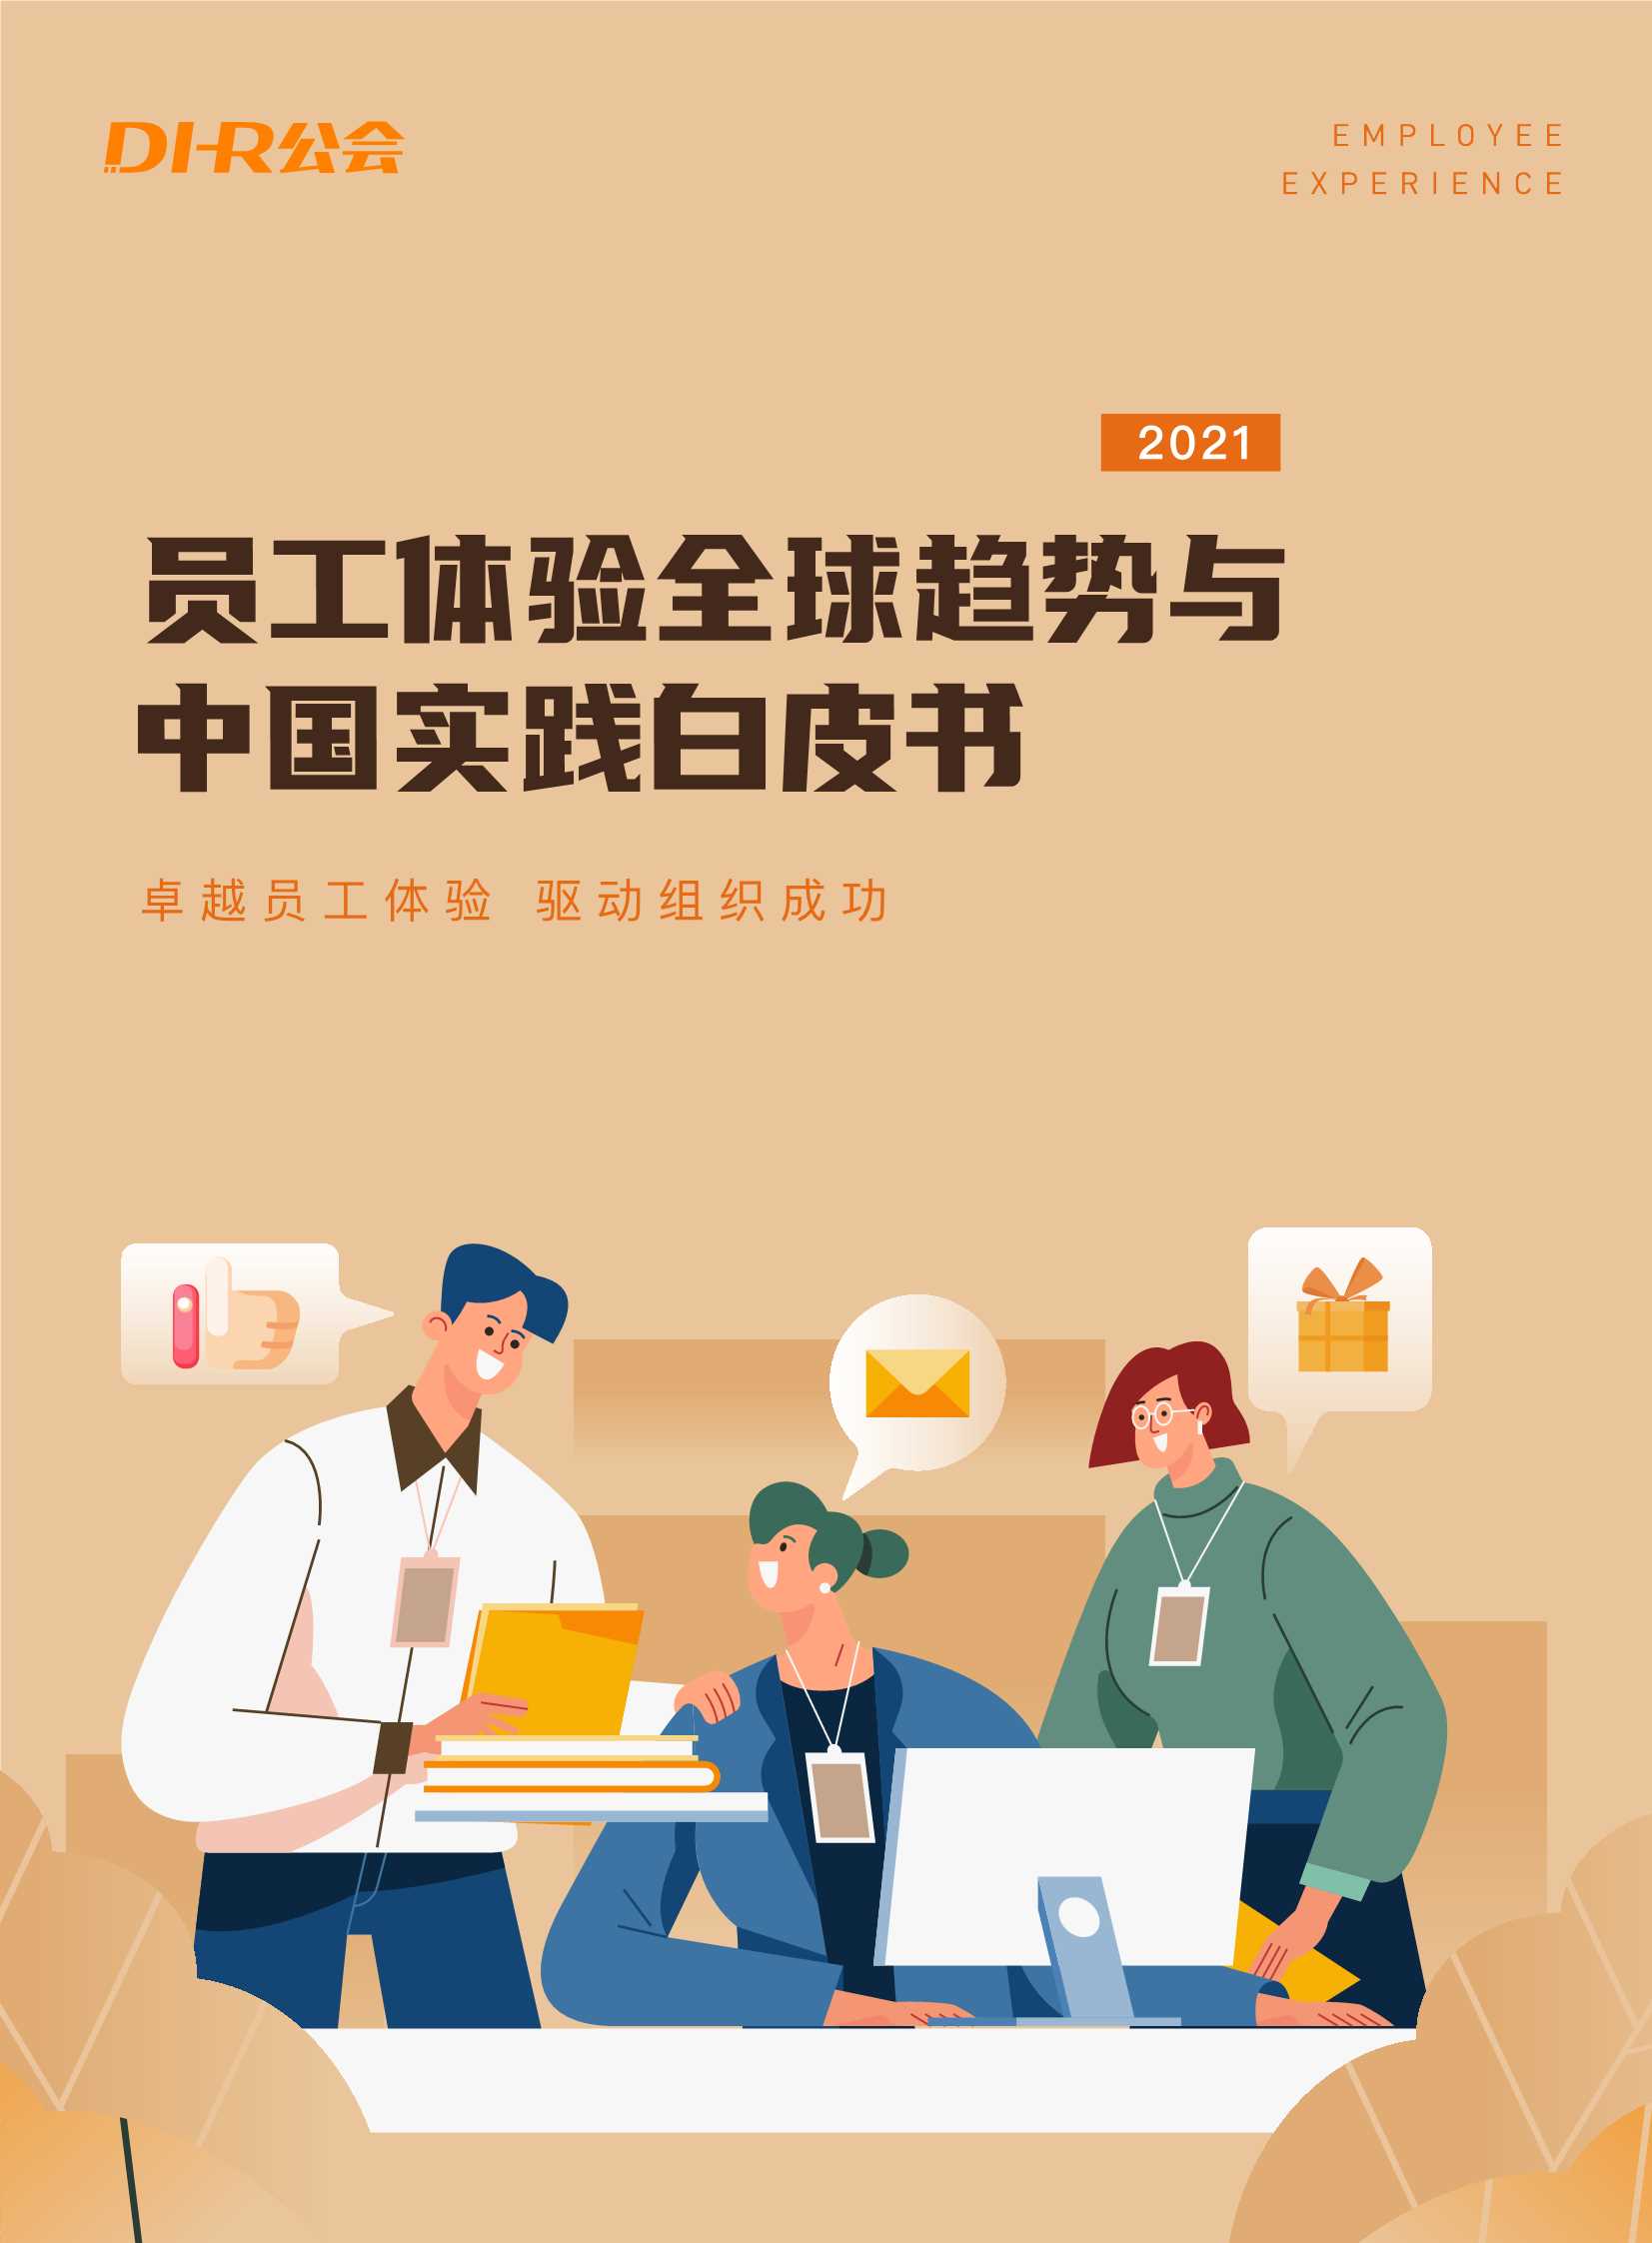 DHR工会-员工体验全球趋势与中国实践白皮书-2021.06-52页